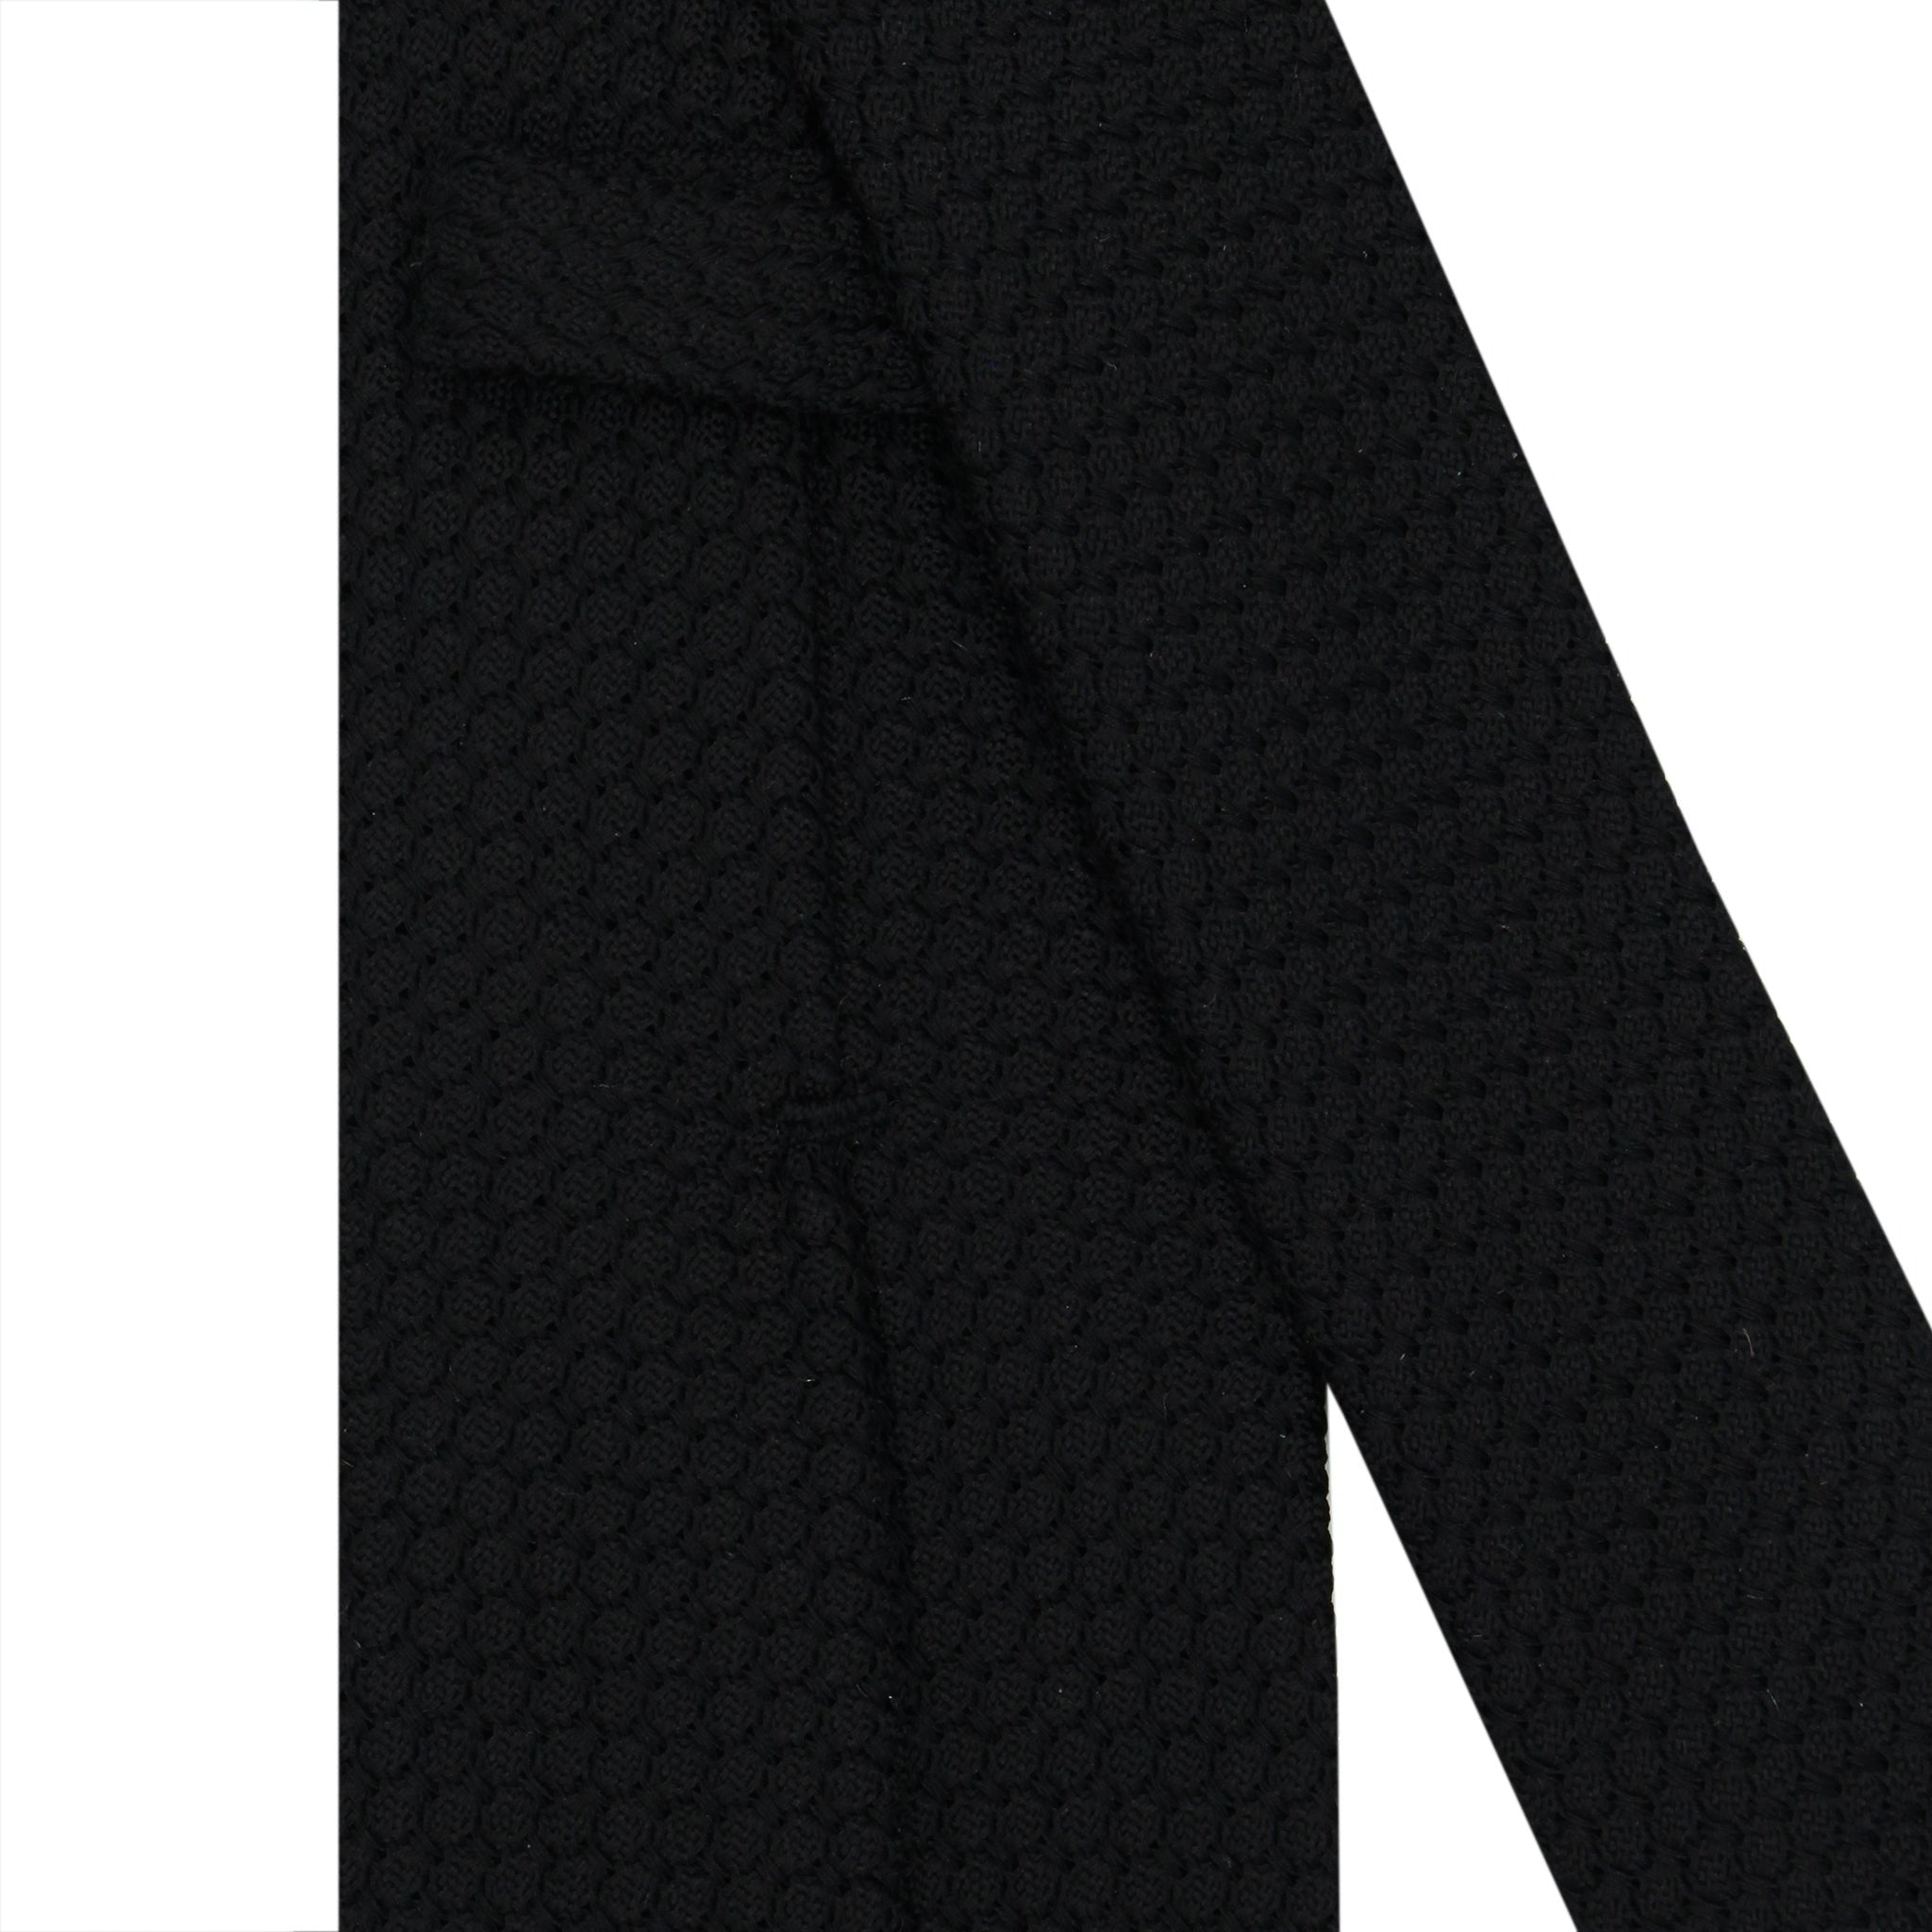 Anversa silk one-color black tie